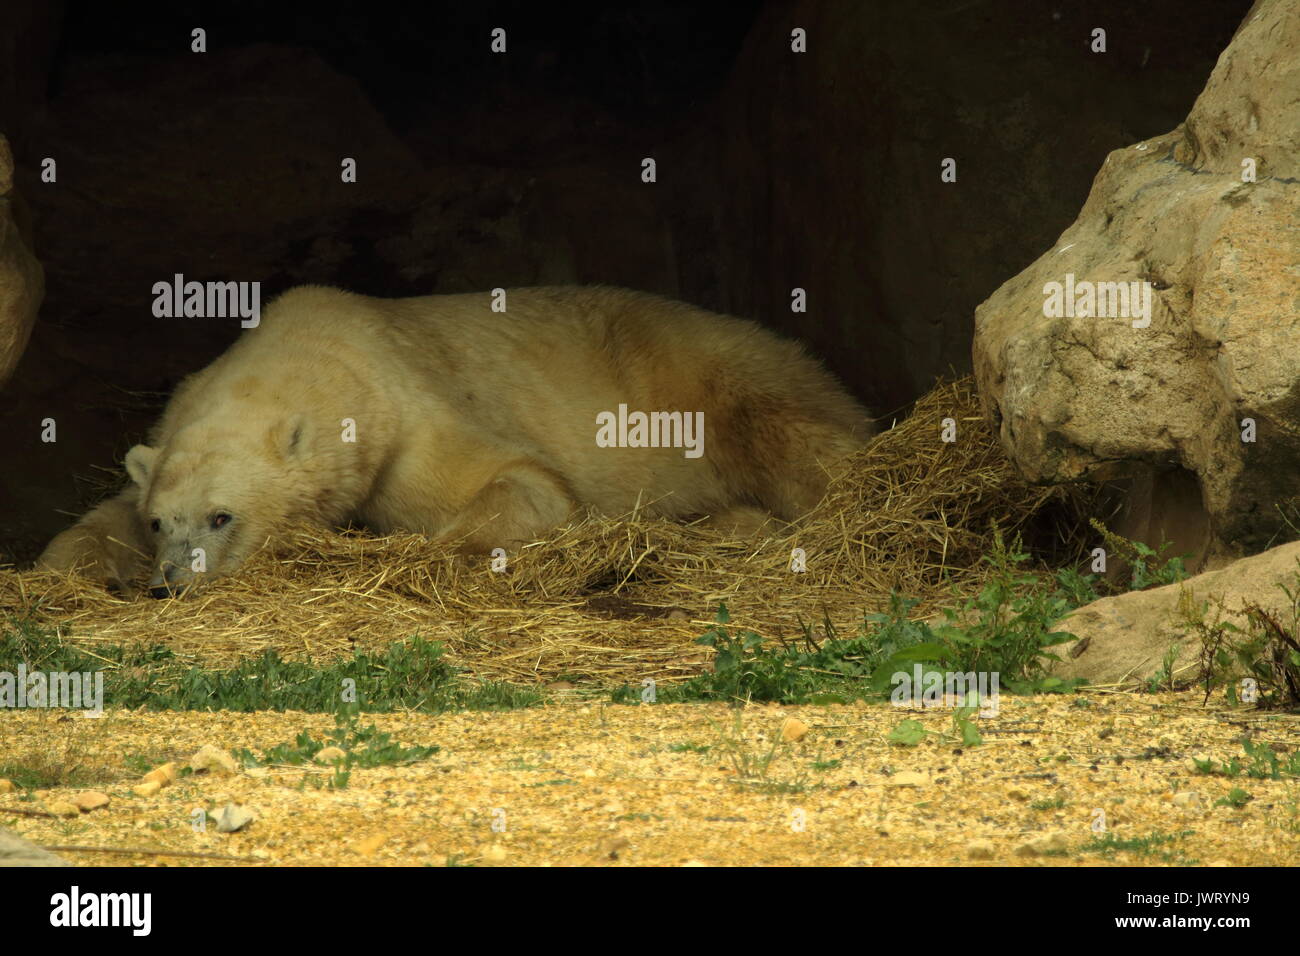 Polar bear,Yorkshire wildlife park Stock Photo